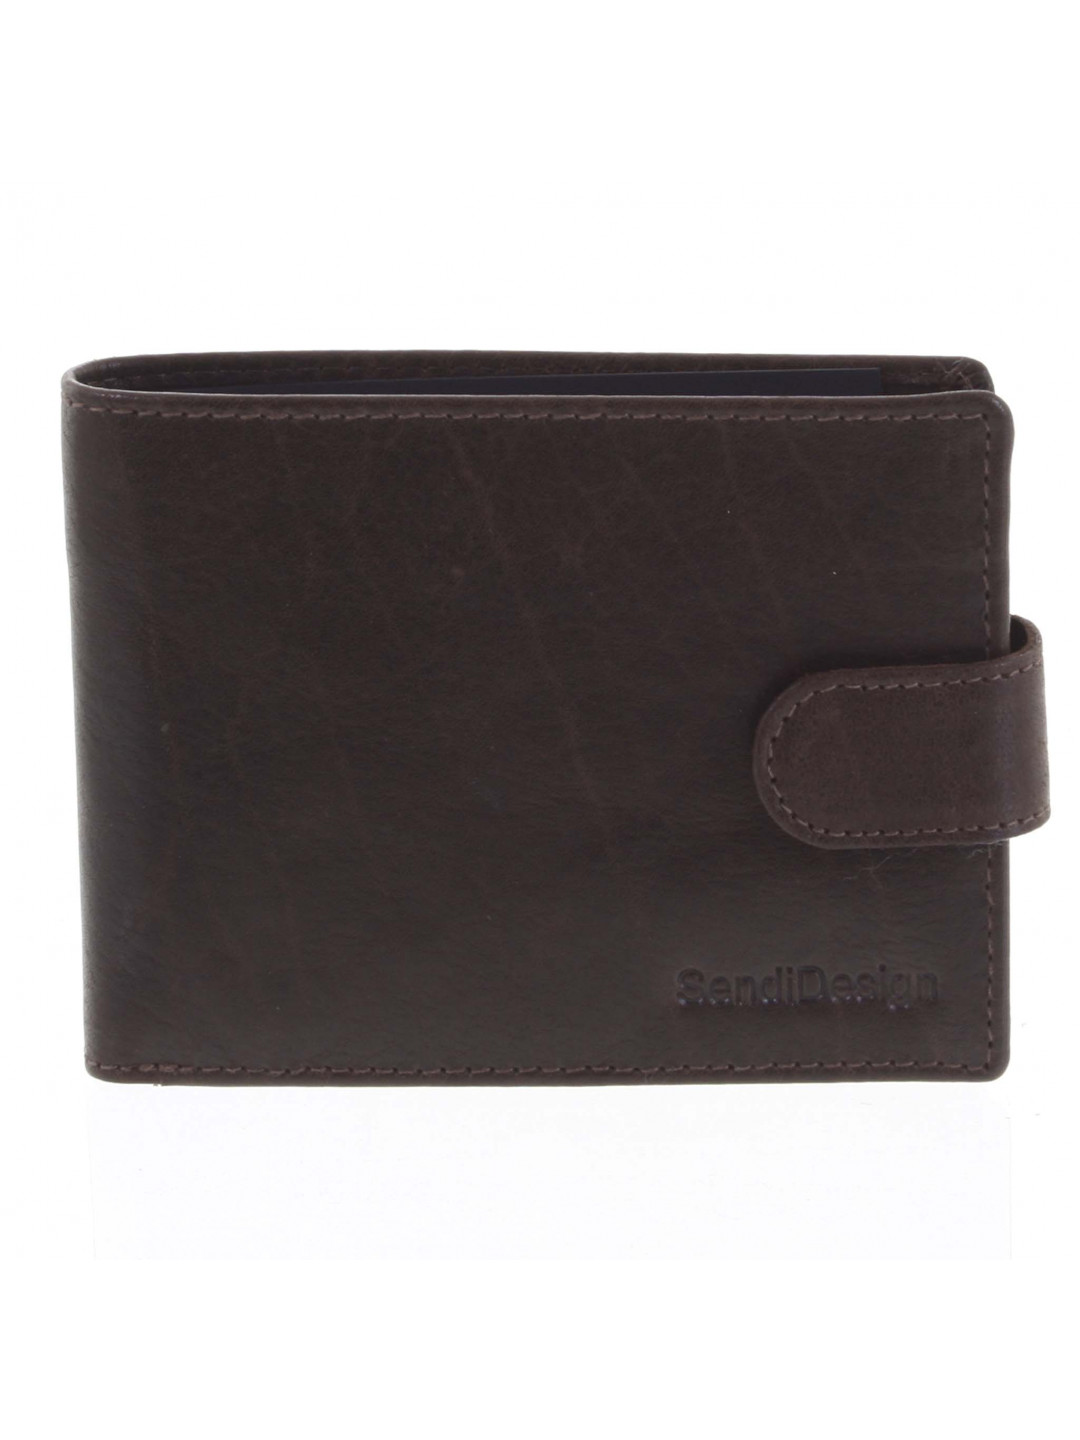 Pánská kožená peněženka tmavě hnědá – SendiDesign Mheo